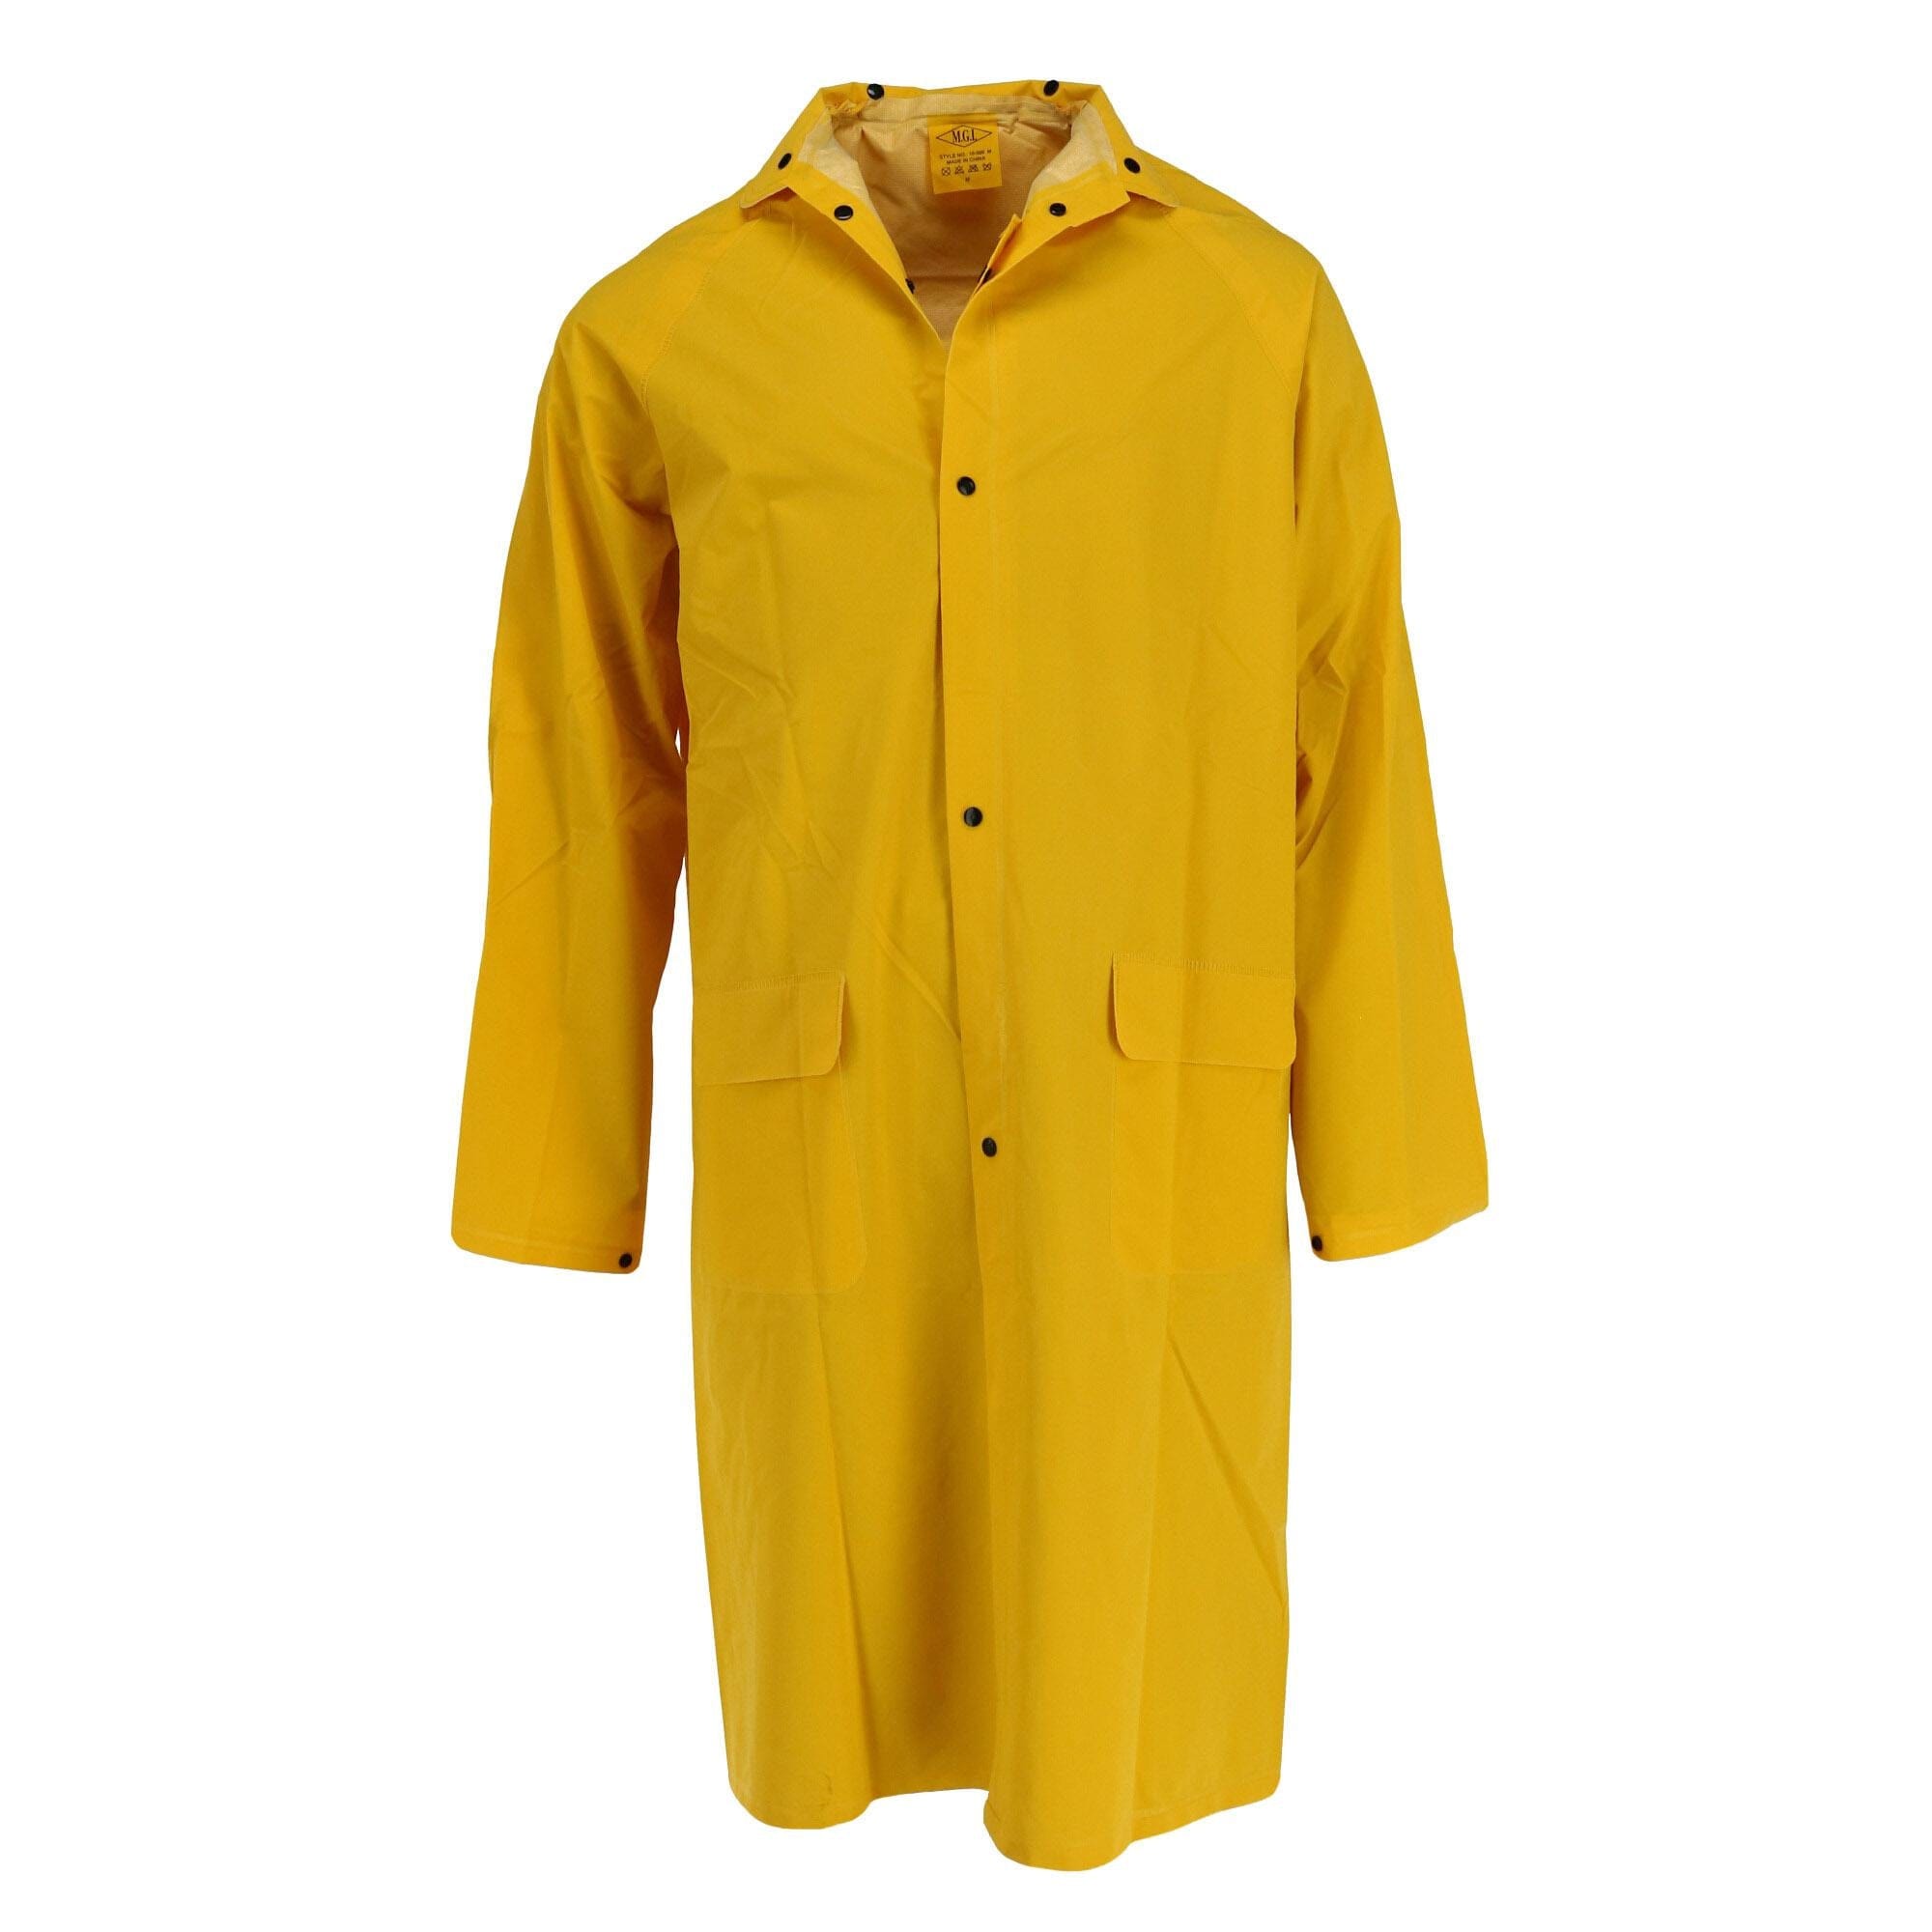 Tuff Grip Men's Rain Coat with Detachable Hood